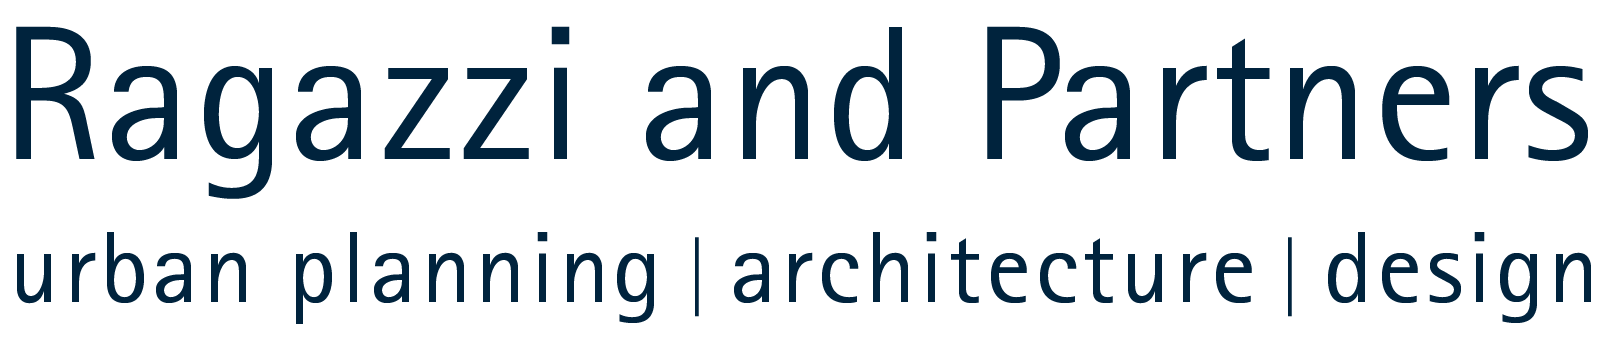 EDILNORD Logo photo - 1